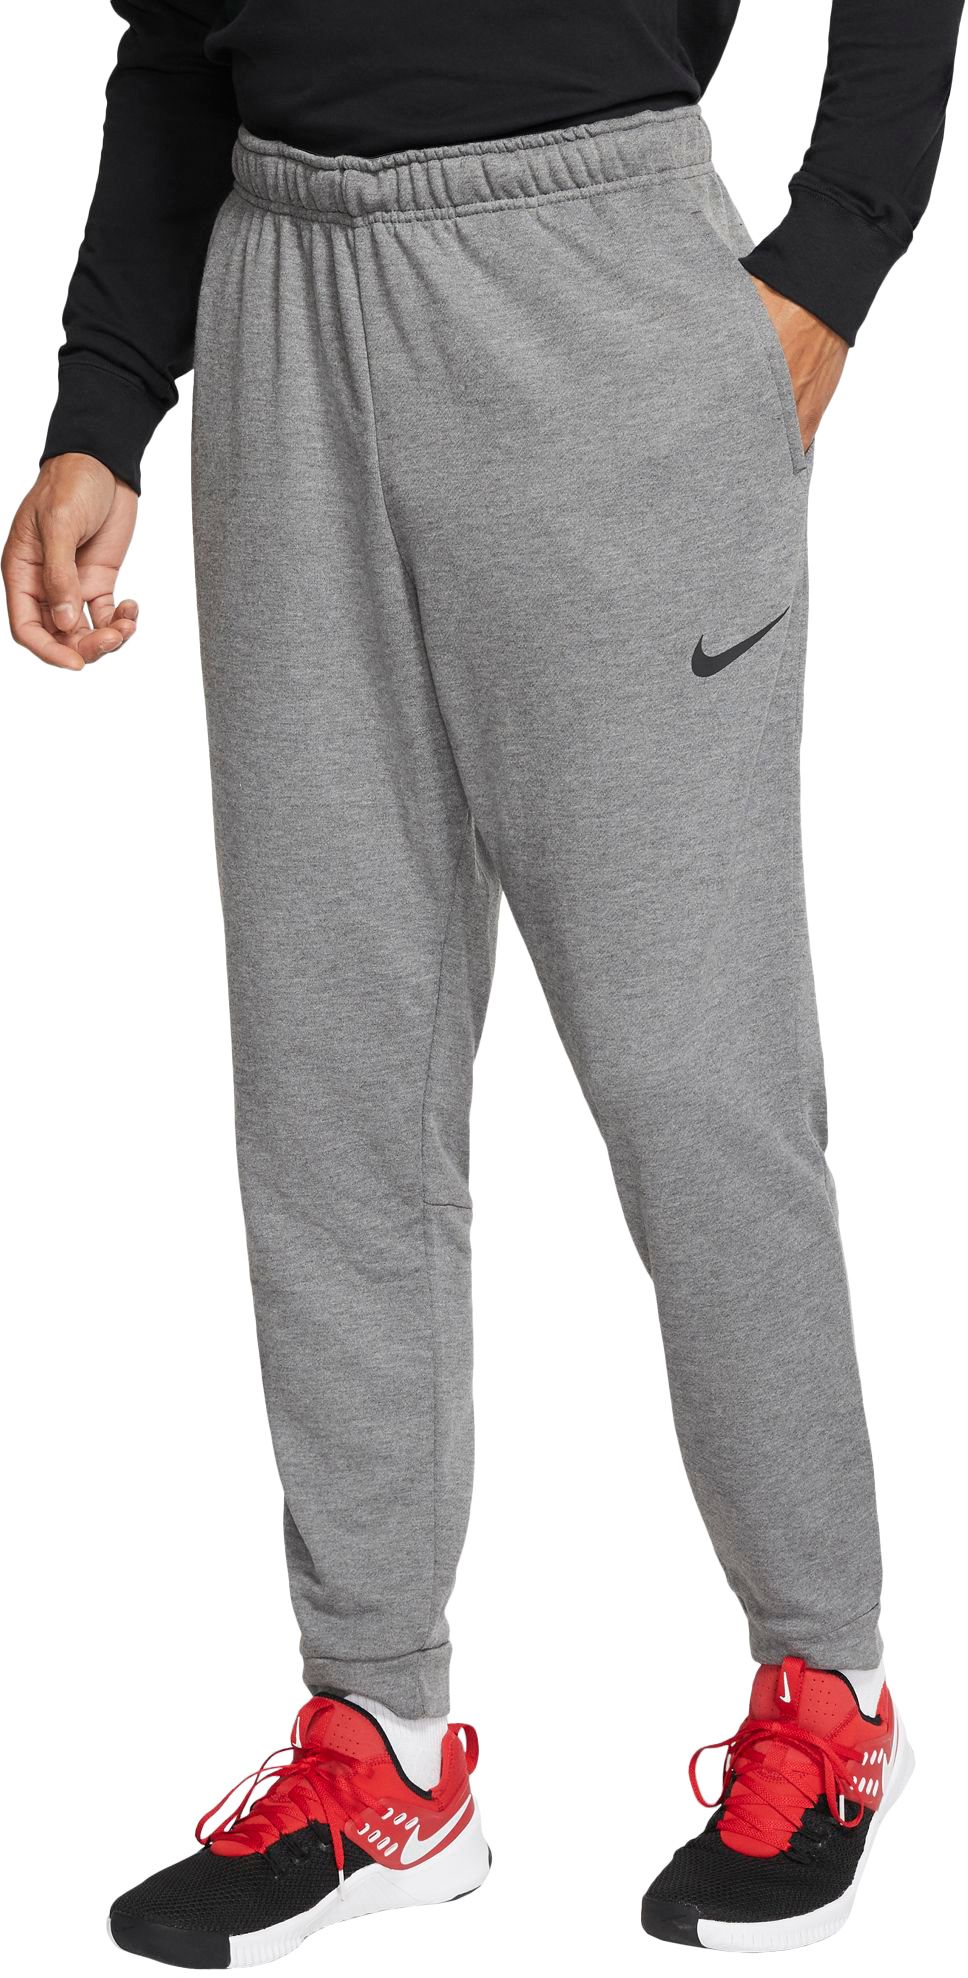 Nike Fleece Pants Black Friday At Dick S - grey pants w nikes and nike elite socks roblox